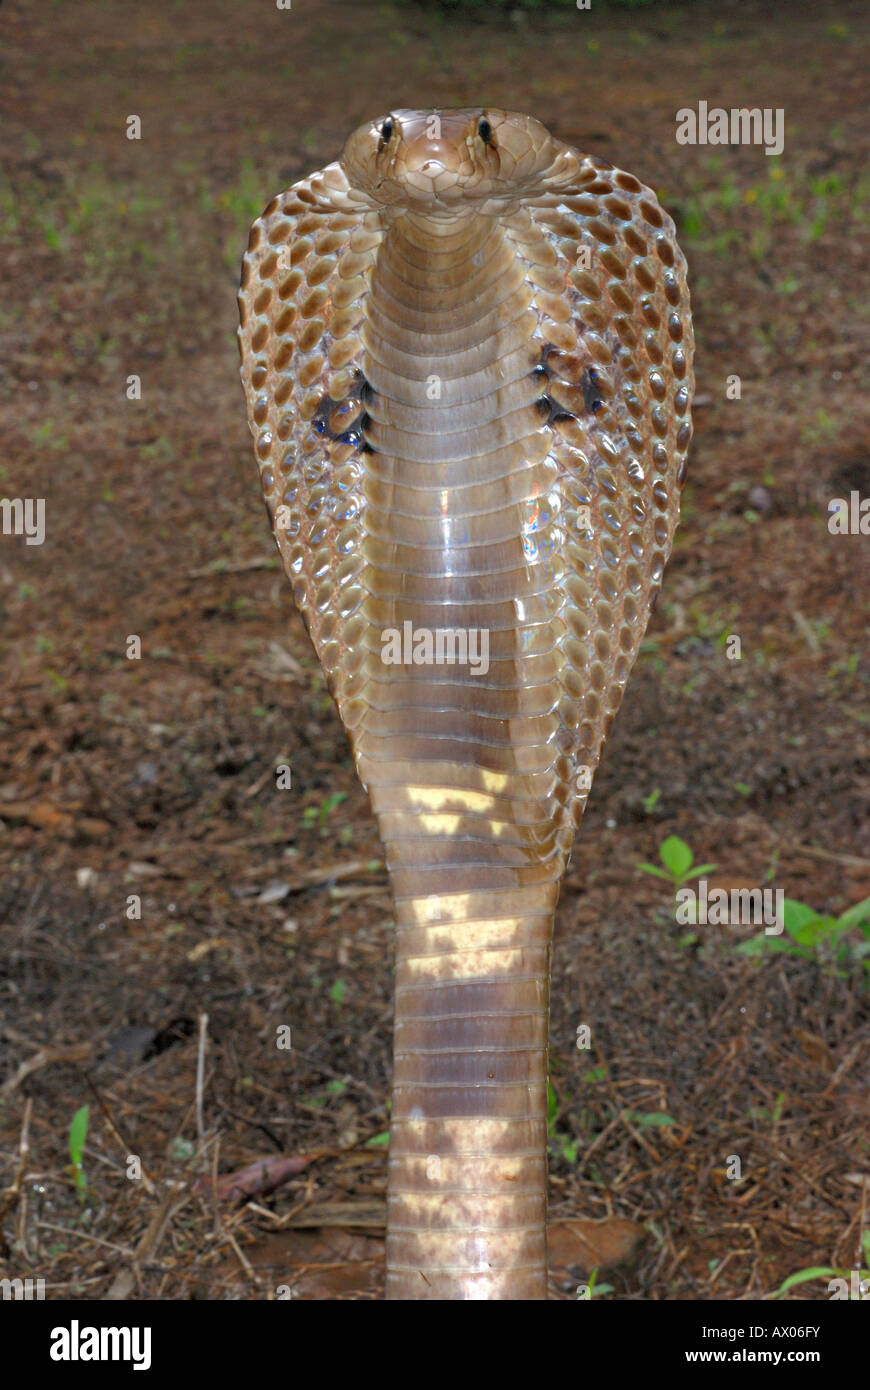 SPECTACLED COBRA. Naja naja. Velenosa, comune. genere di elapid velenosi serpenti. Foto Stock